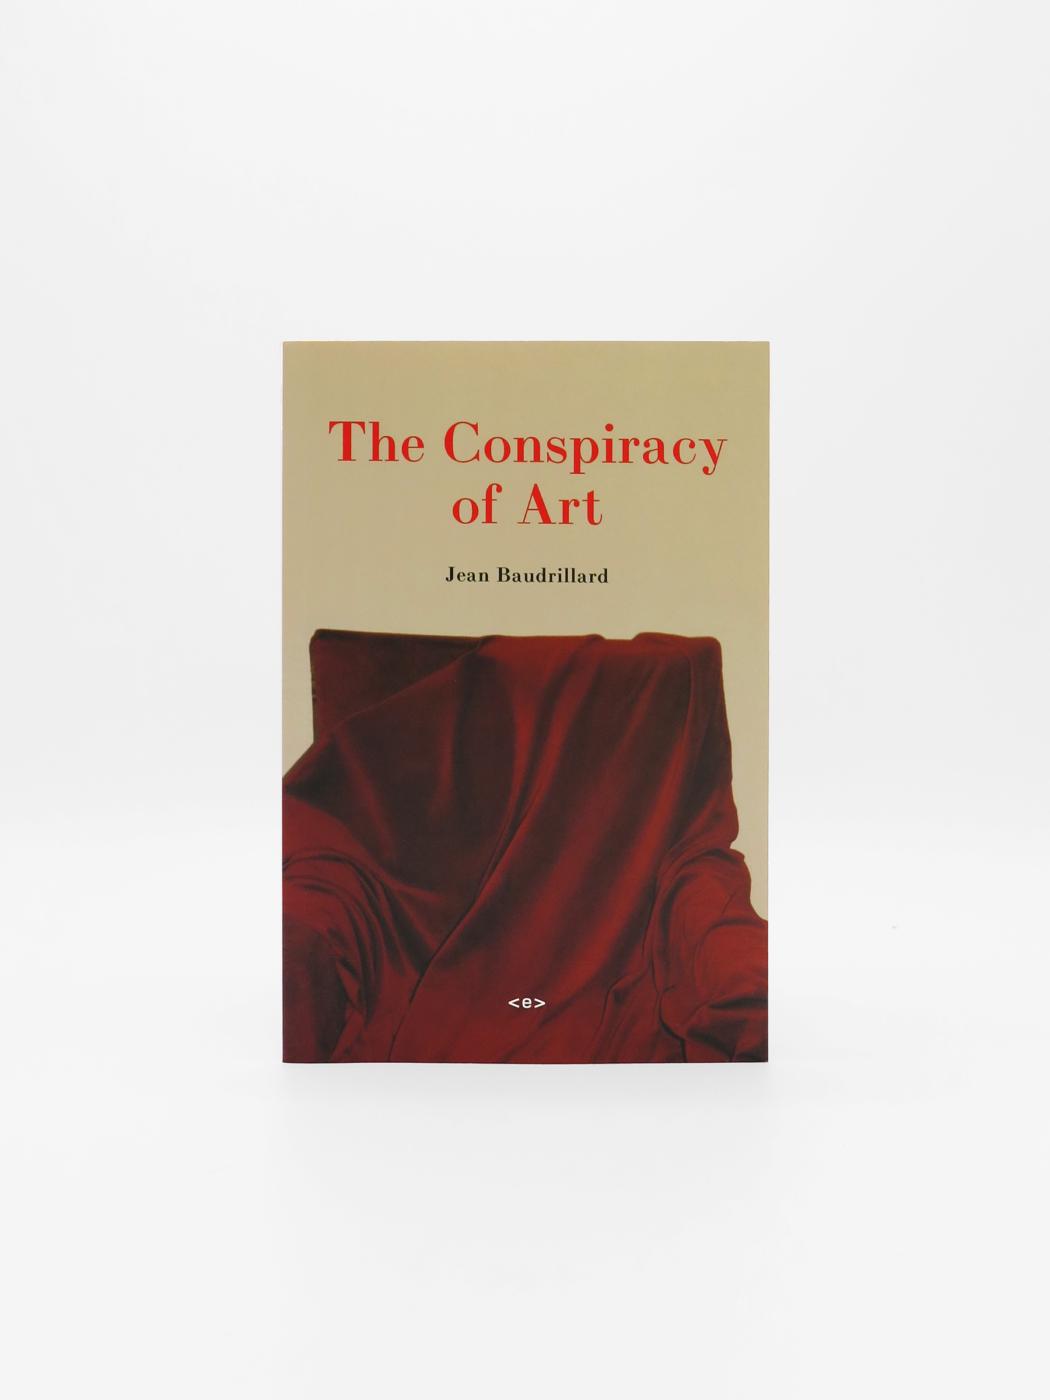 Jean Baudrillard, The Conspiracy of Art